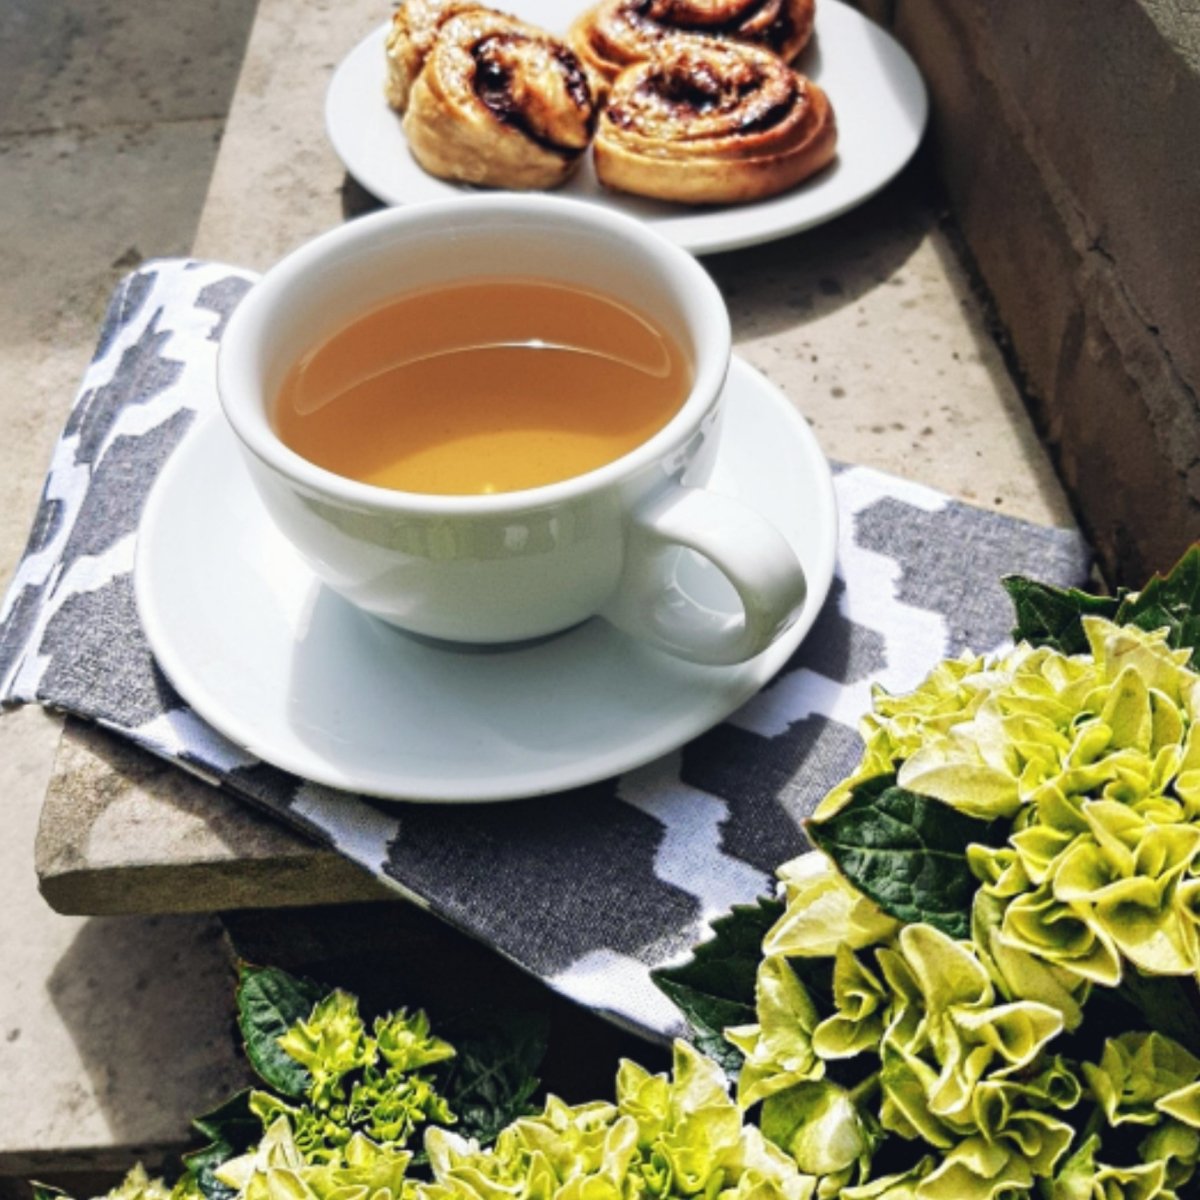 Homemade Vegan Cinnamon Buns | Mystic Brew Teas